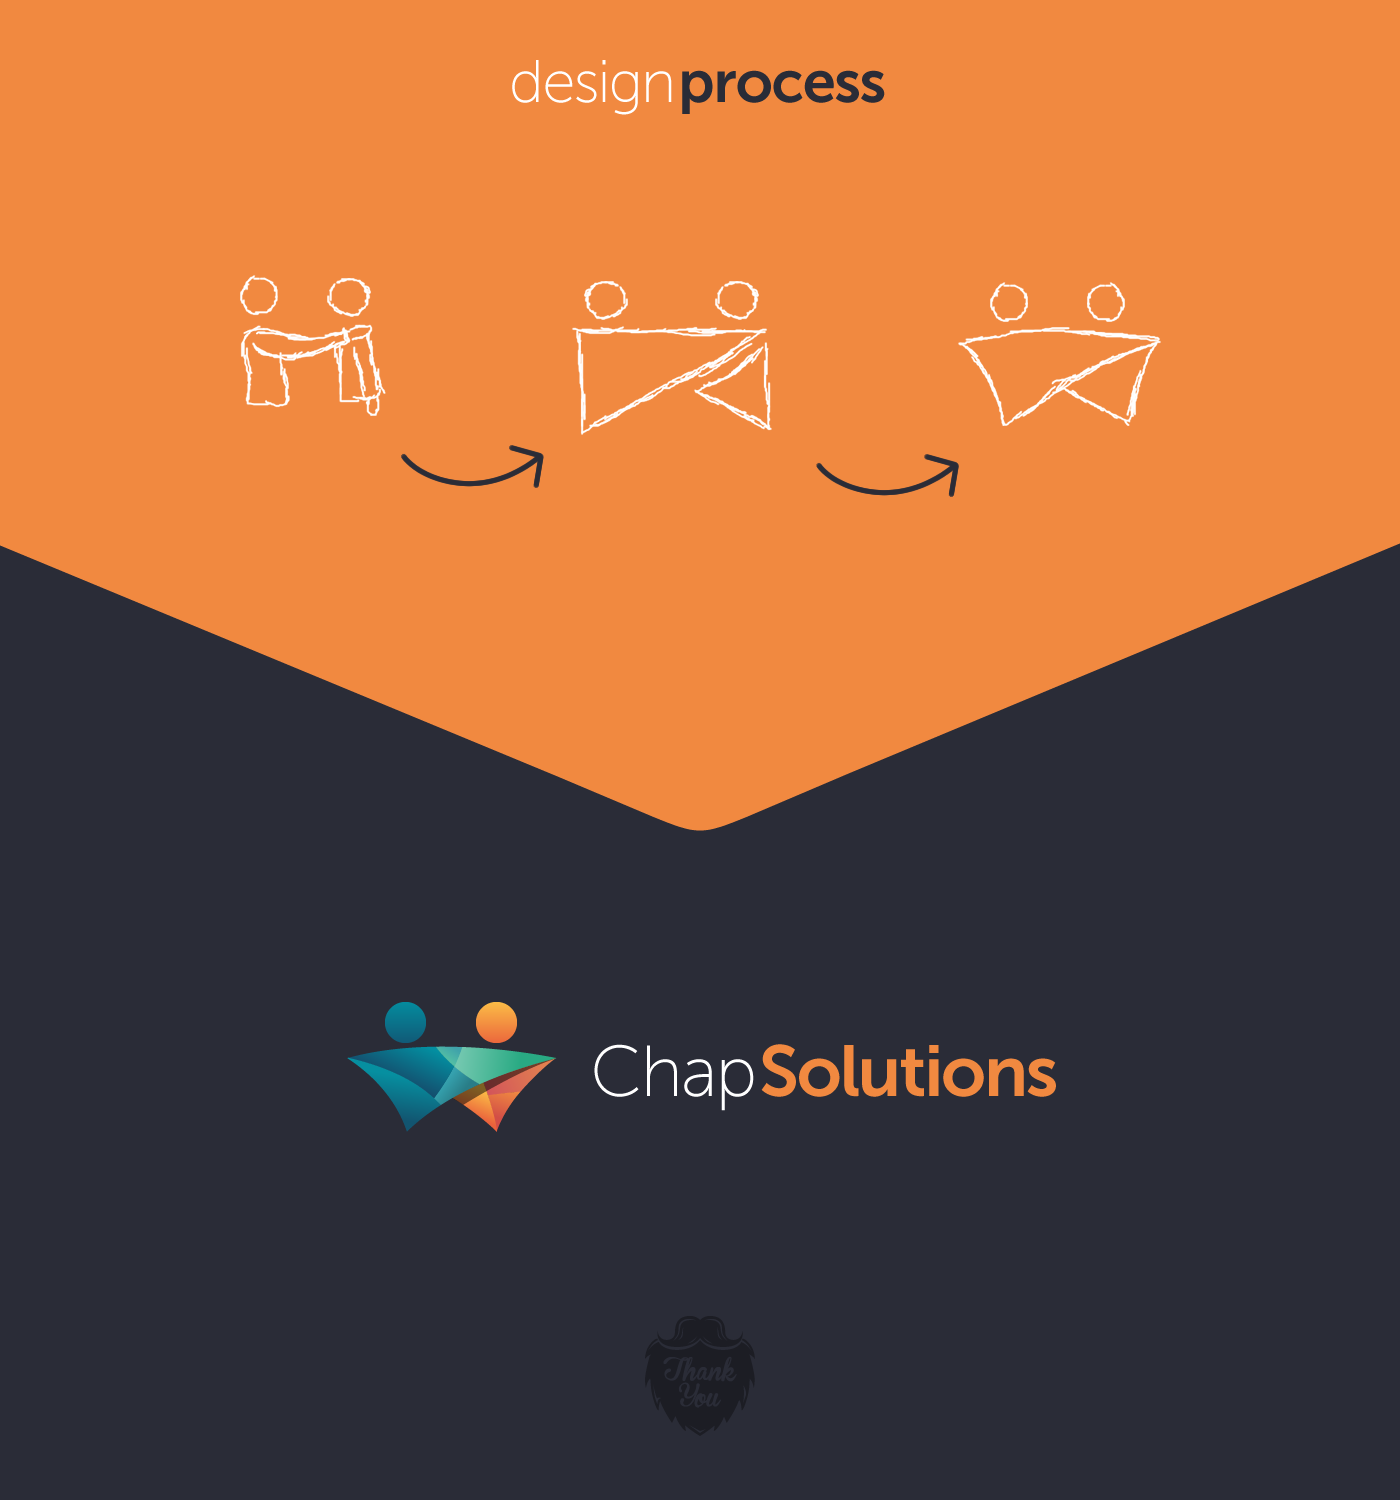 chap solutions Chap Solutions